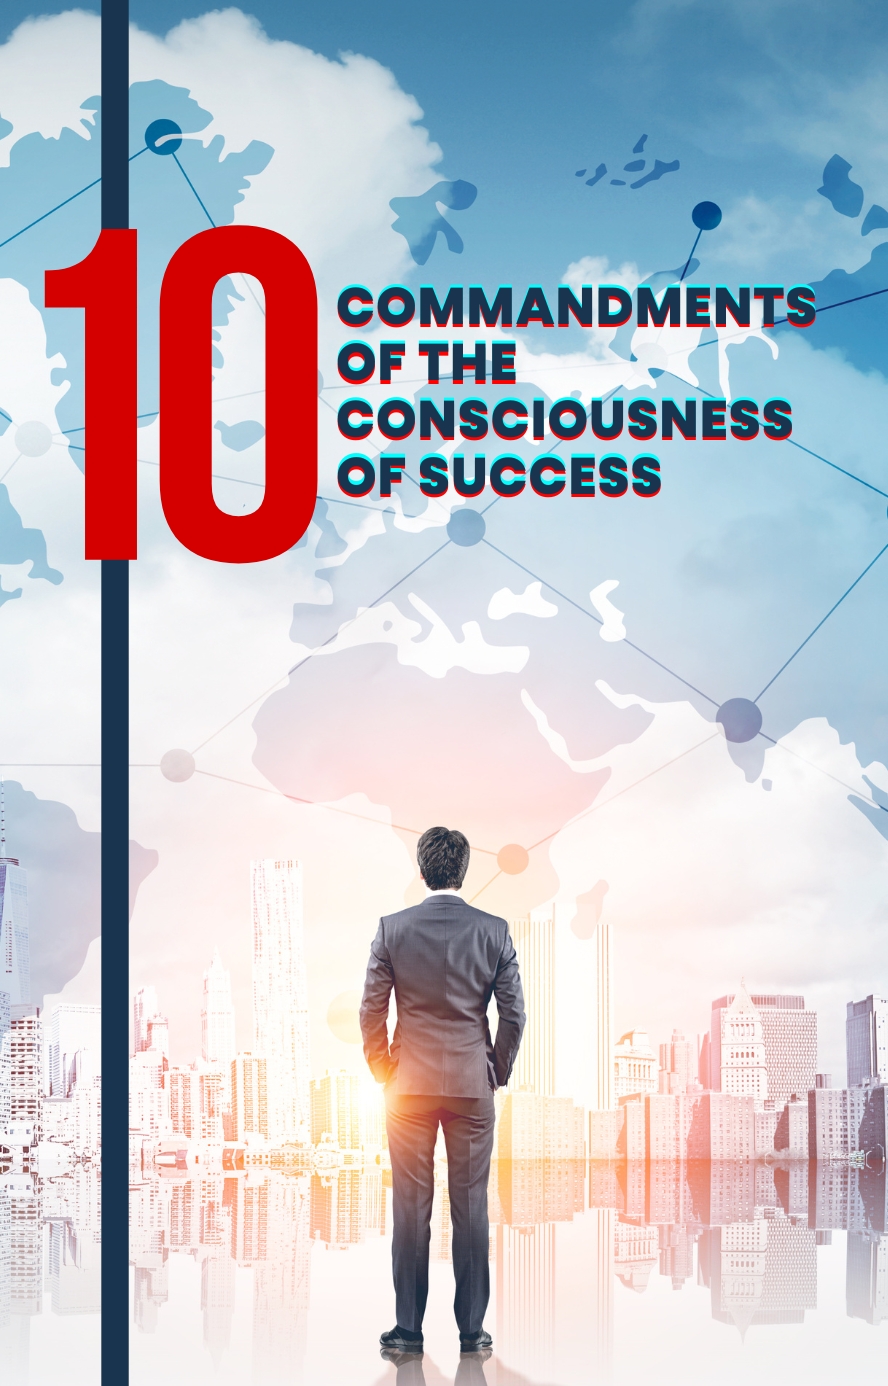 10 Commandments of the Consciousness of Success